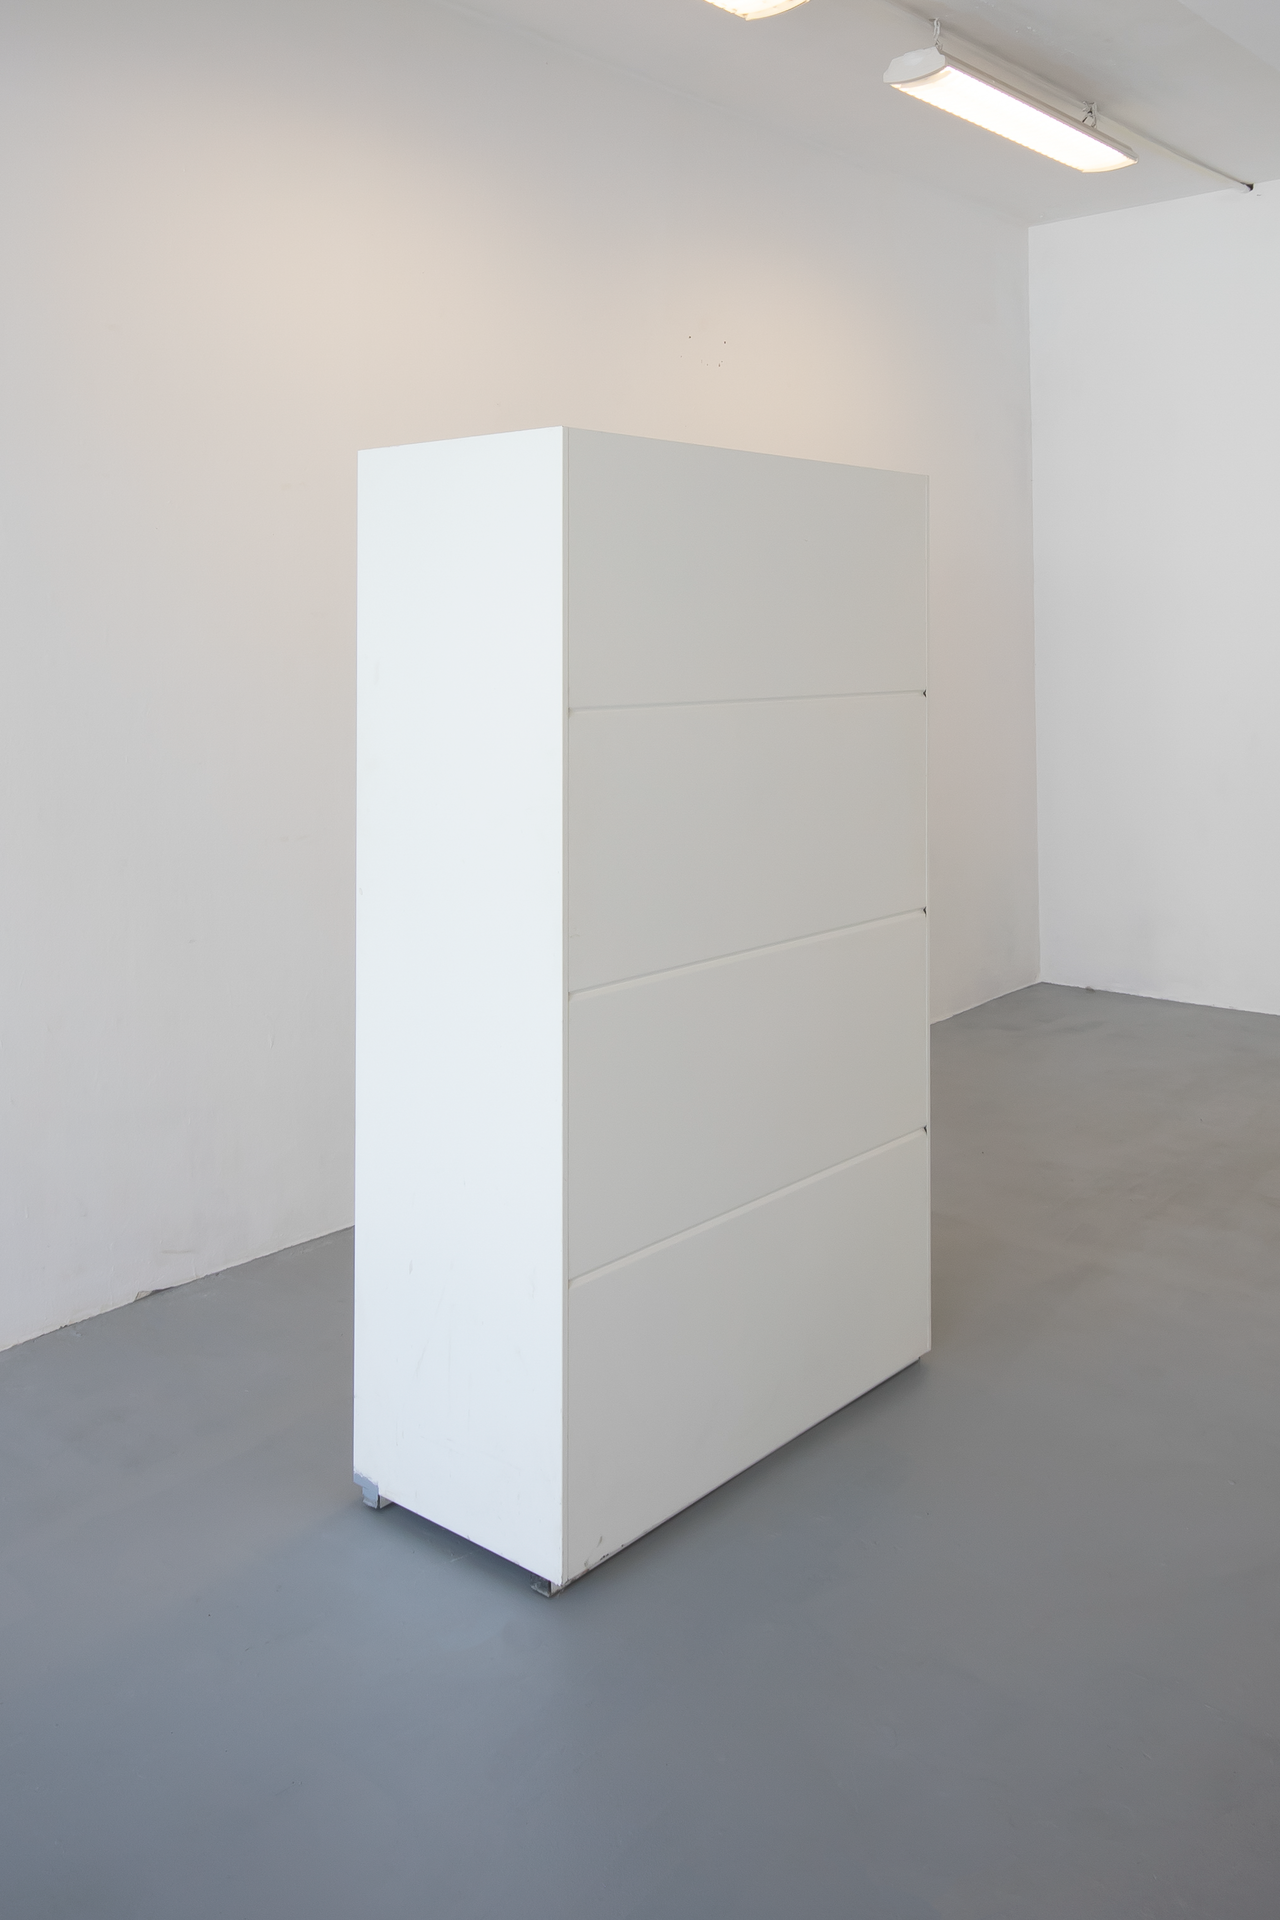 Hugo Bausch Belbachir, Untitled (Cabinet), Metal cabinet, 183 x 110 x 50 cm, 71 1/8 x 43 1/4 x 19 3/4 inches.